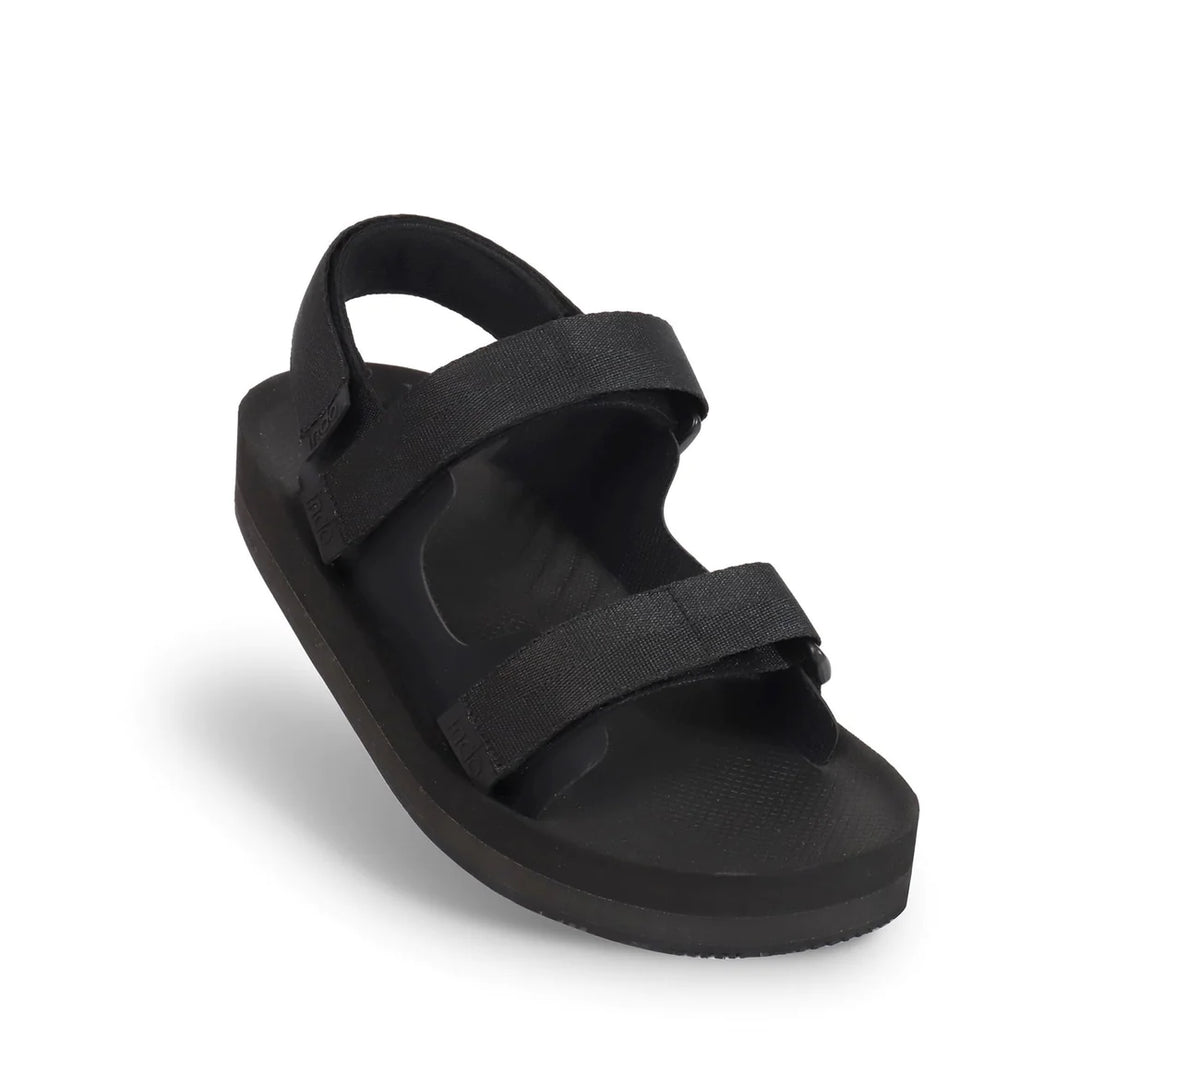 Men's Sandals Adventurer - Black